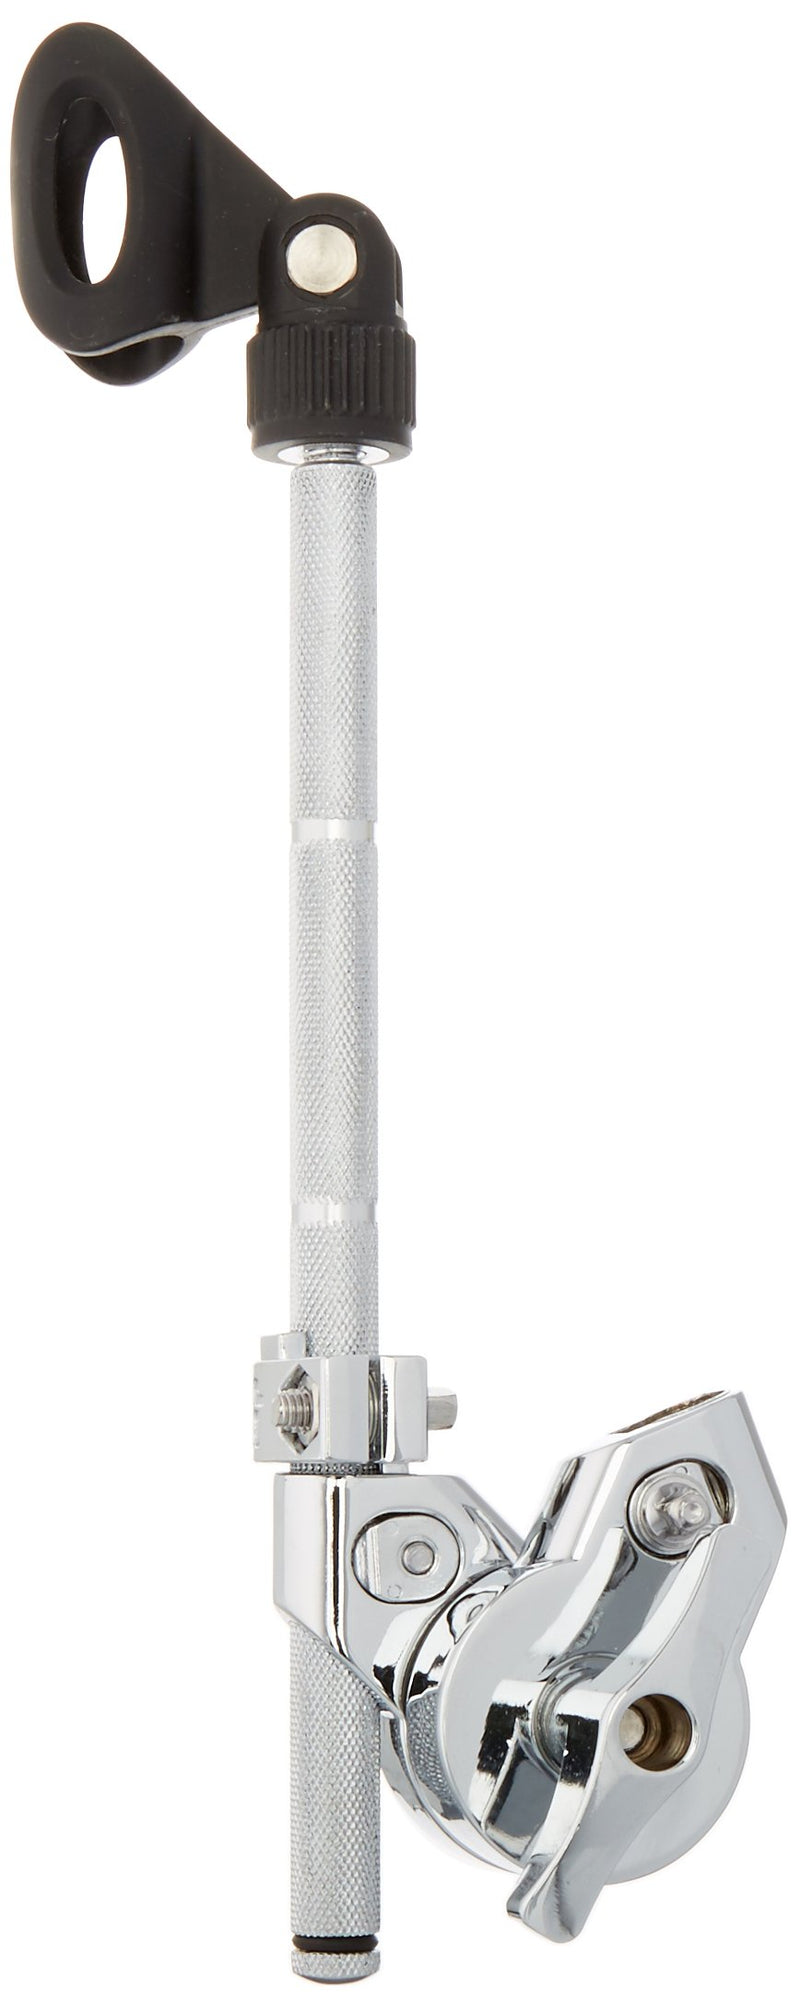 PDP Concept Microphone Mount/Holder - Floor Tom